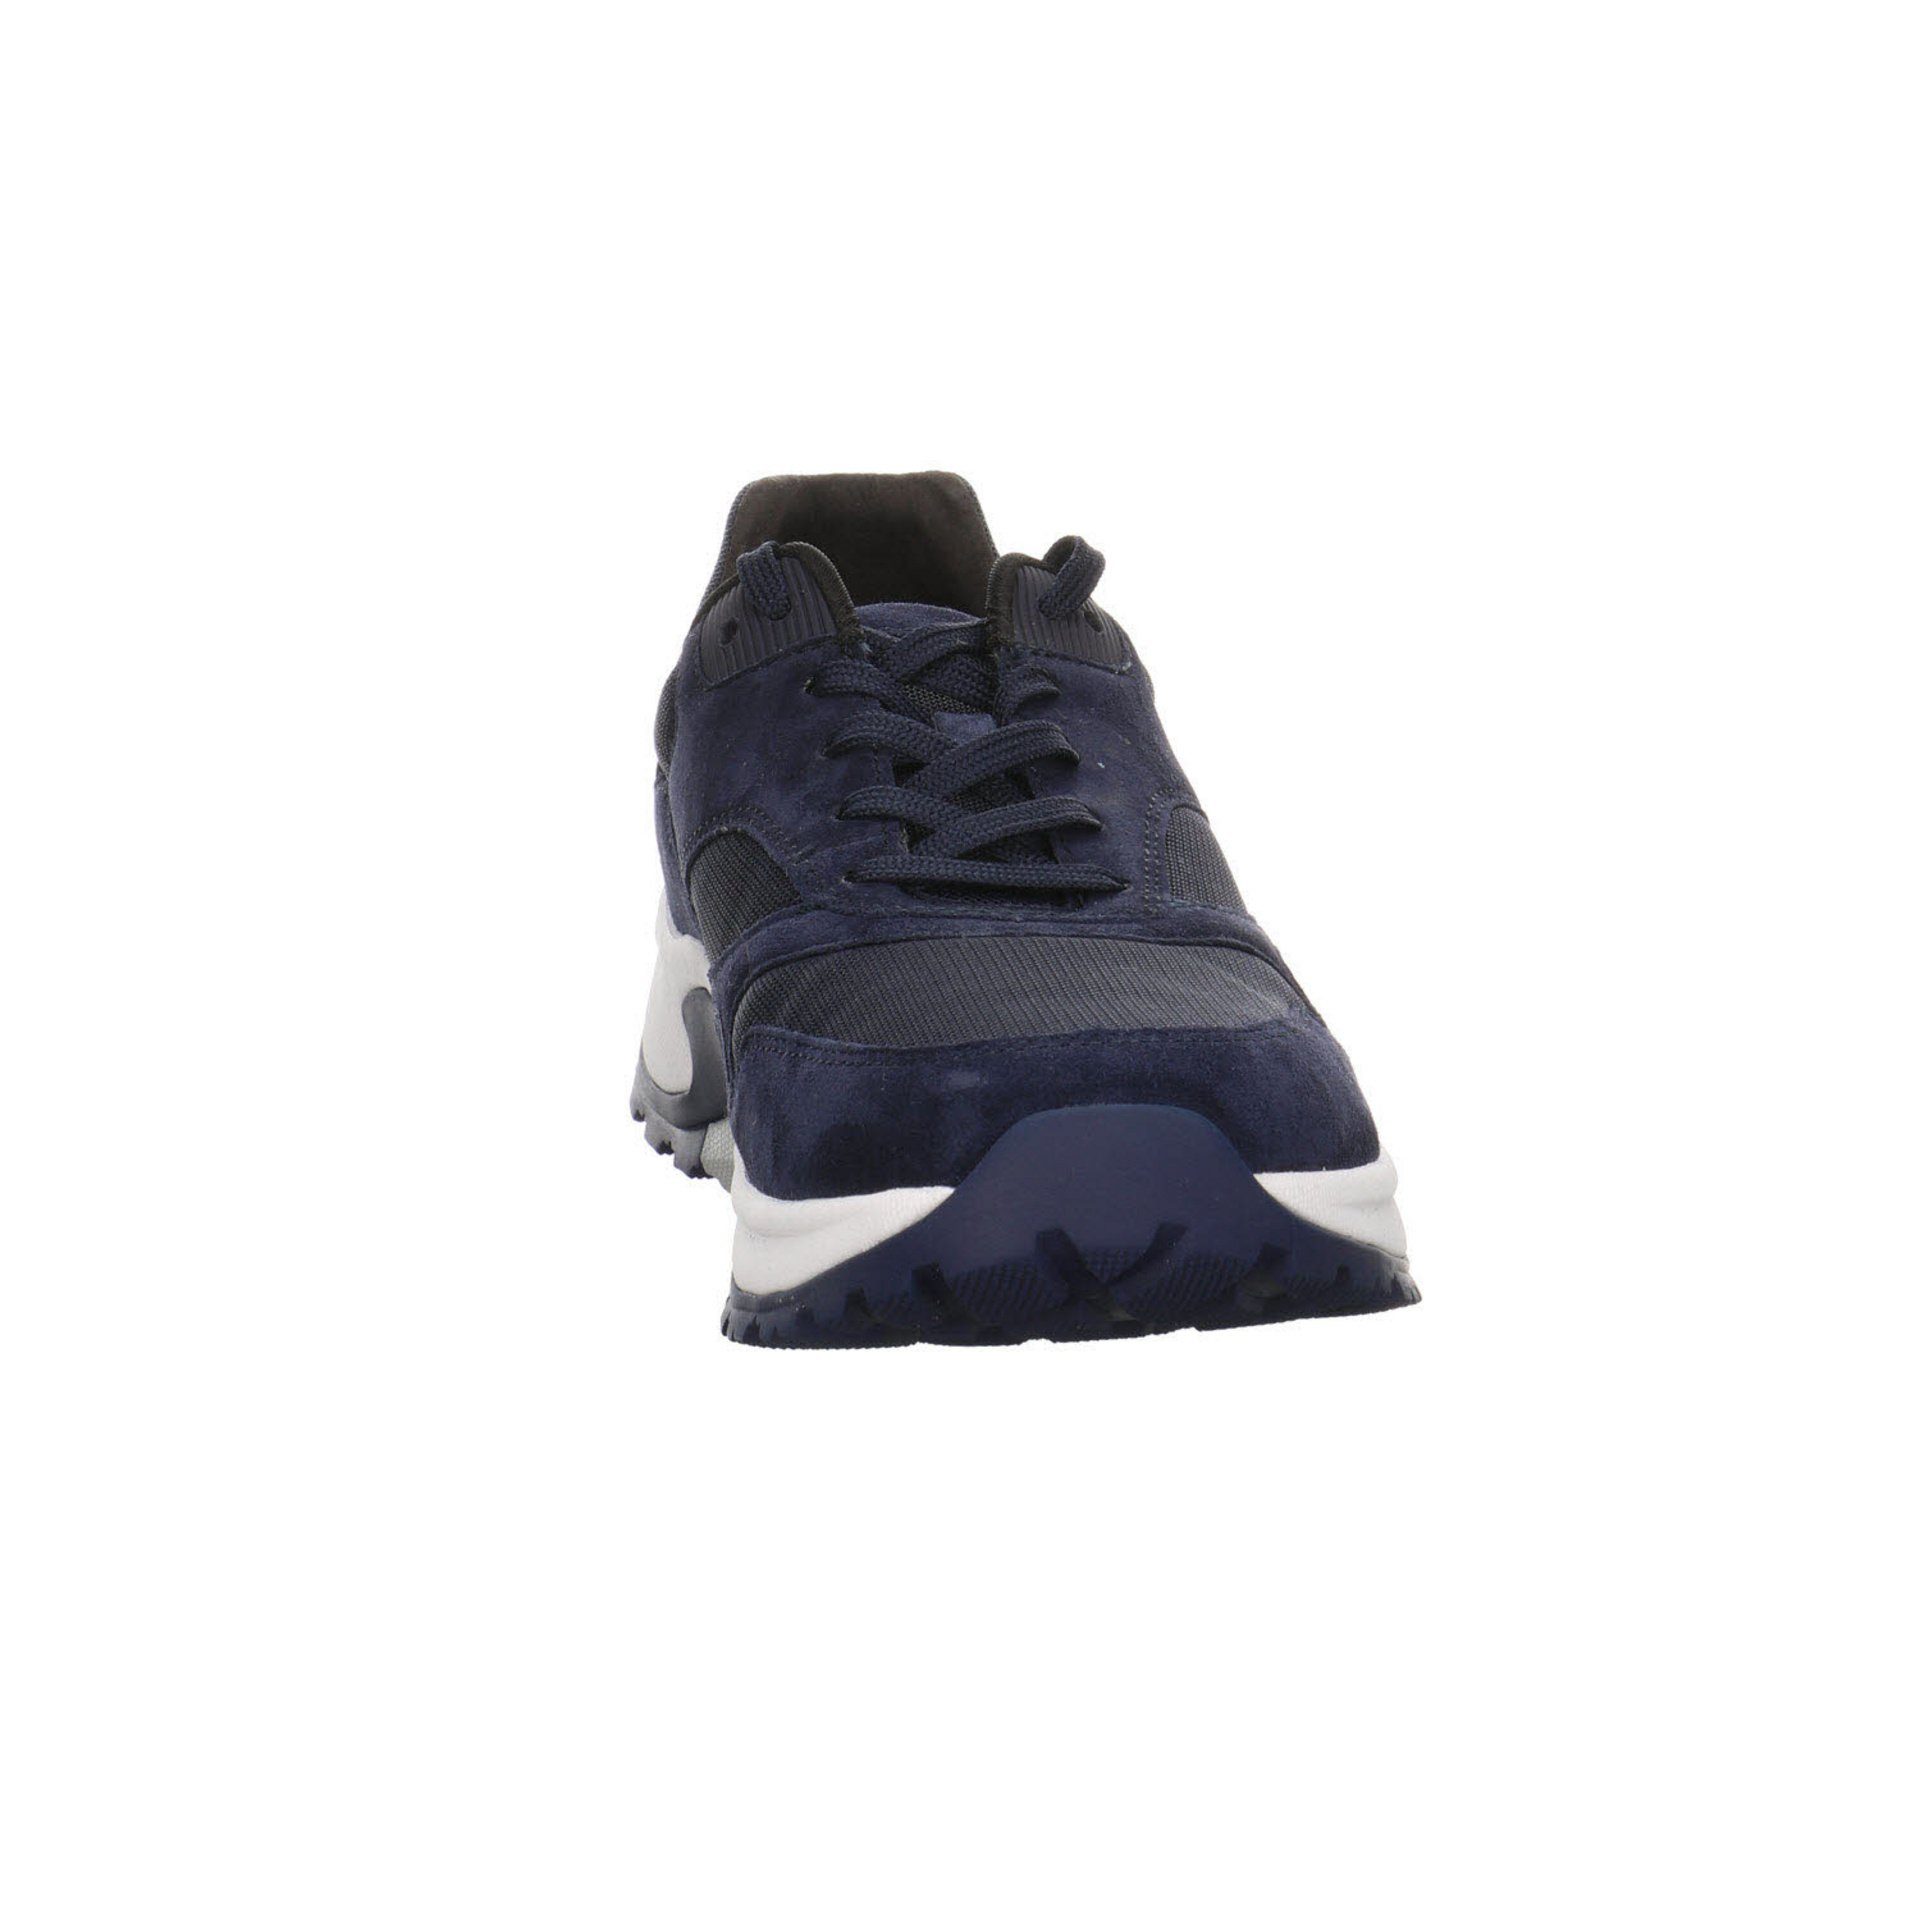 Pius Gabor Herren Sneaker blau Schnürschuh Rollingsoft dunkel Leder-/Textilkombination Sneaker Schuhe